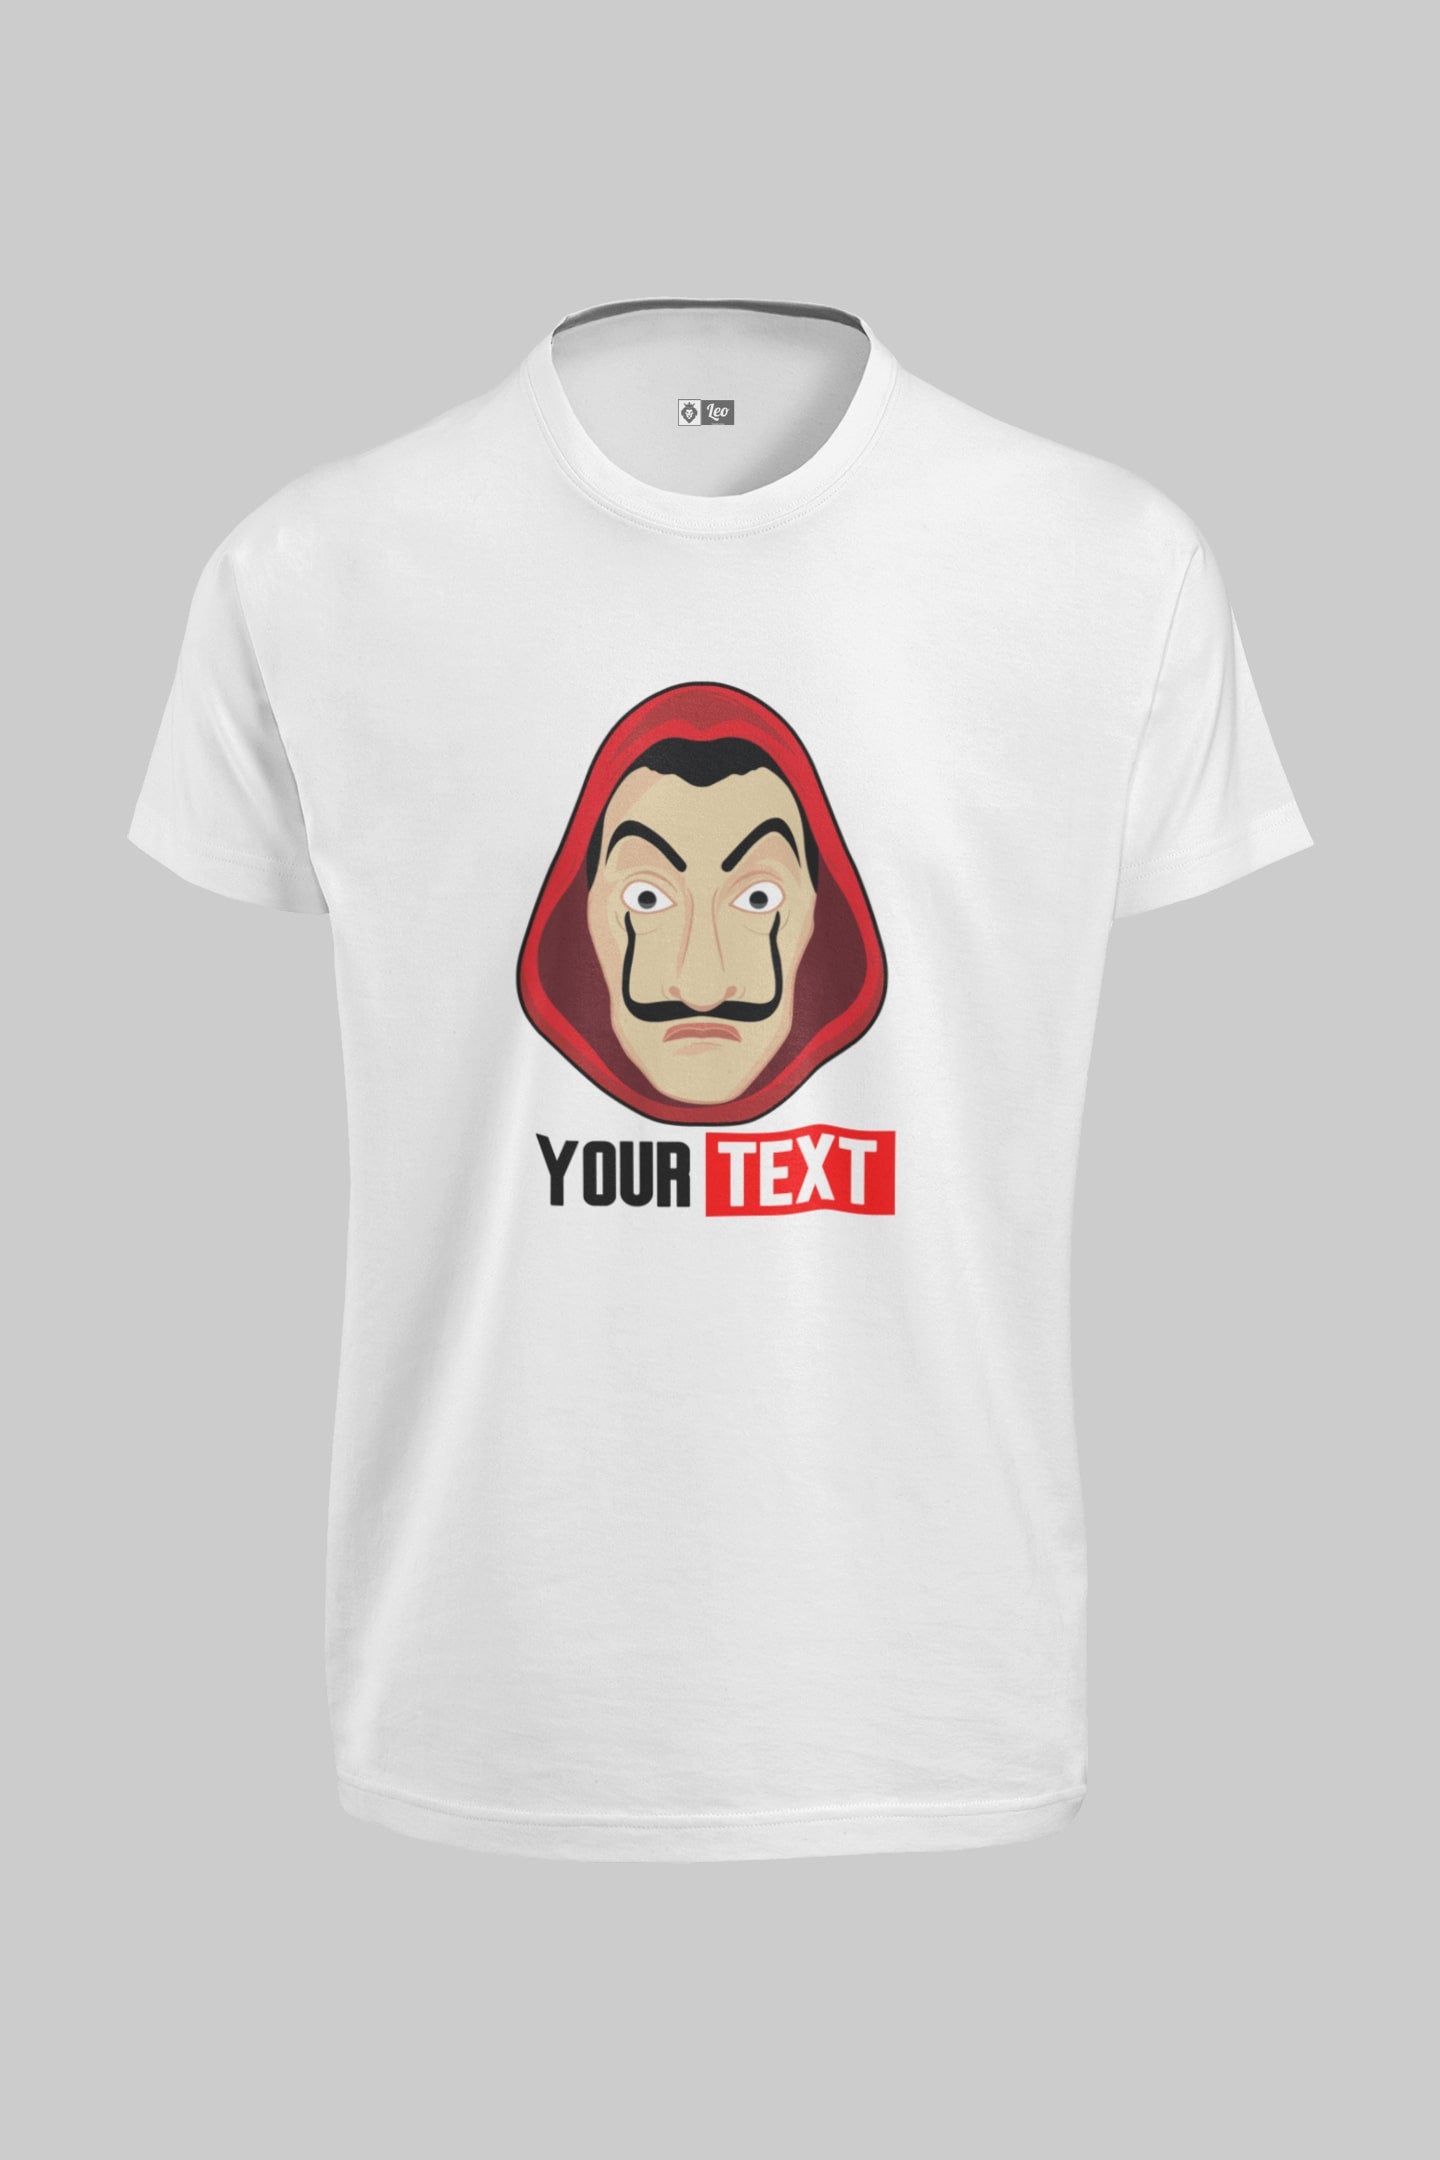 Money Heist Web Series T-Shirt